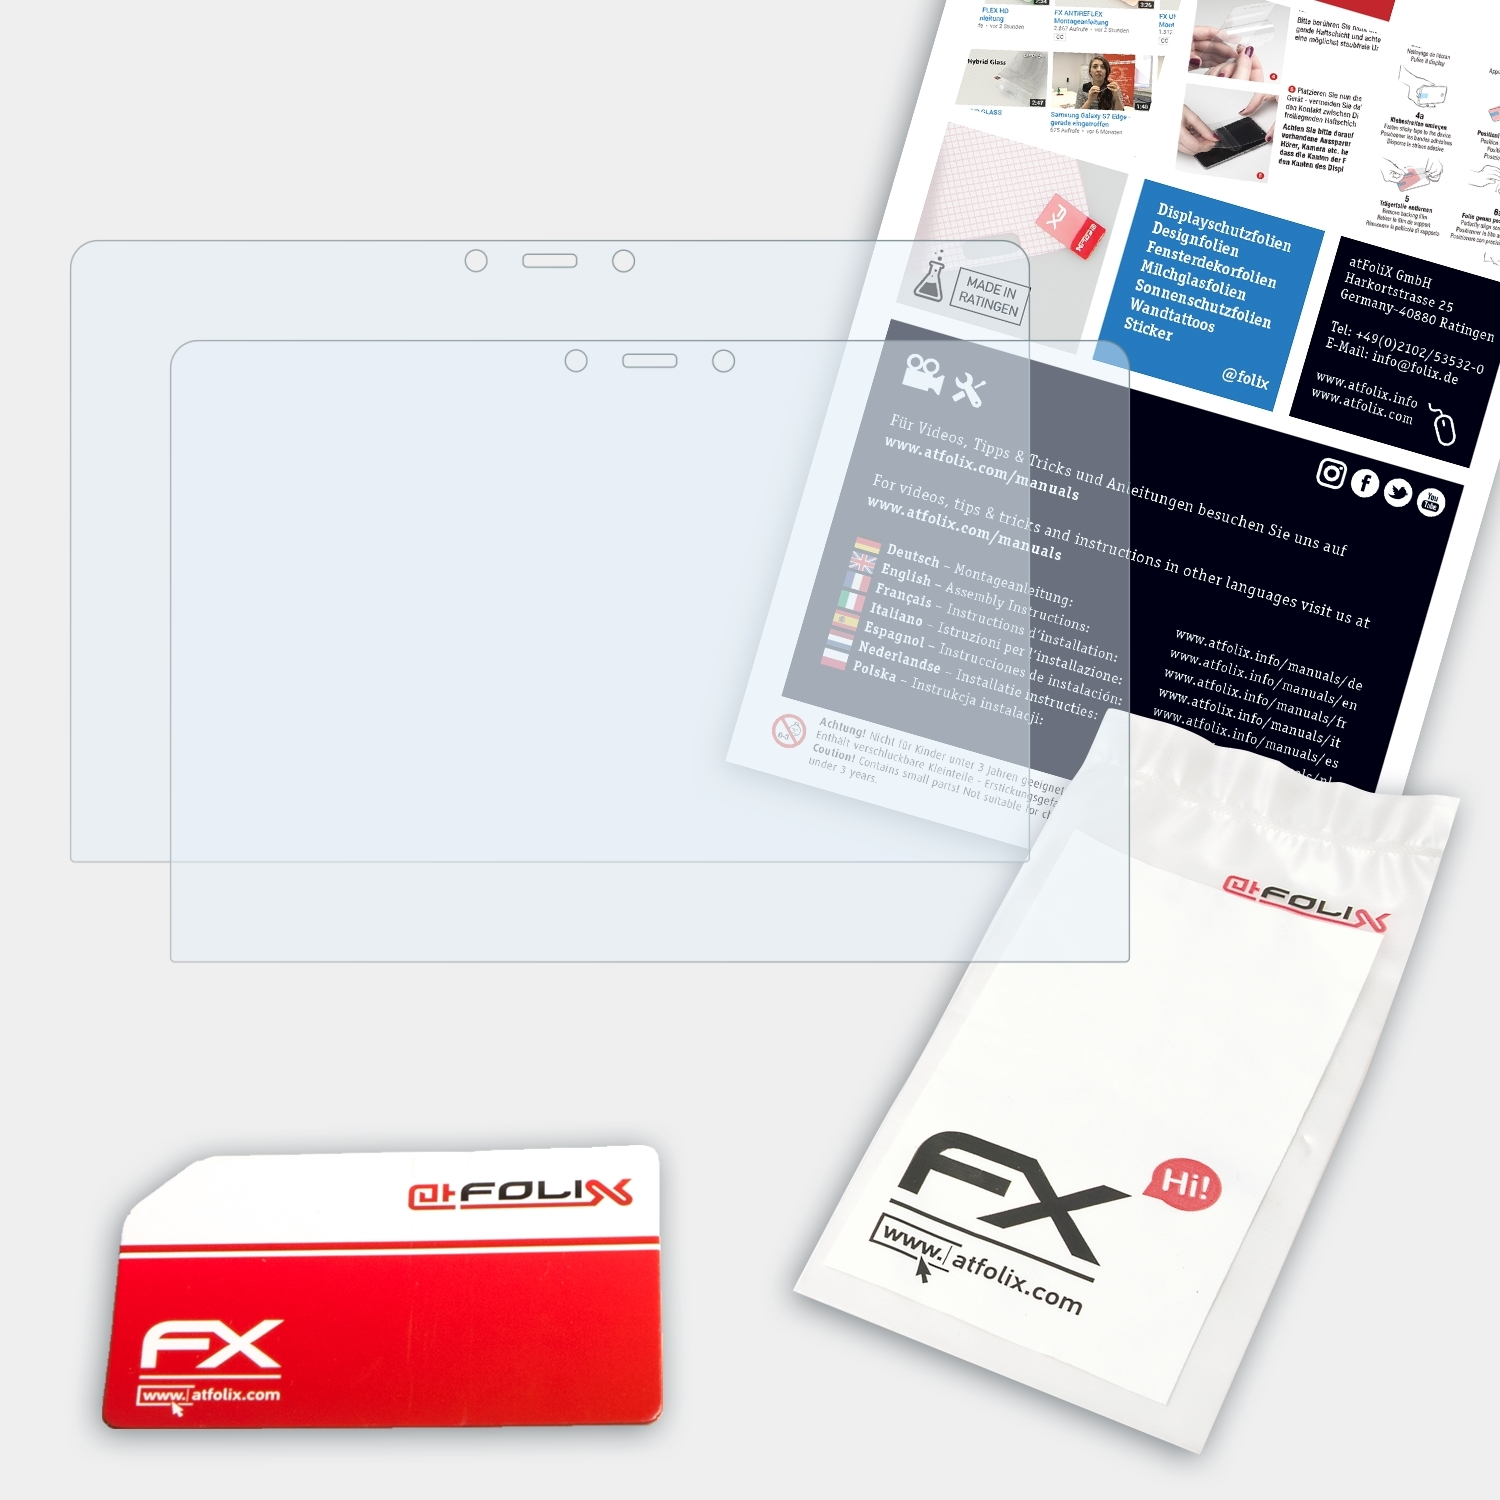 ATFOLIX 2x Displayschutz(für x360 Pavilion FX-Clear 14-ba018ng) HP